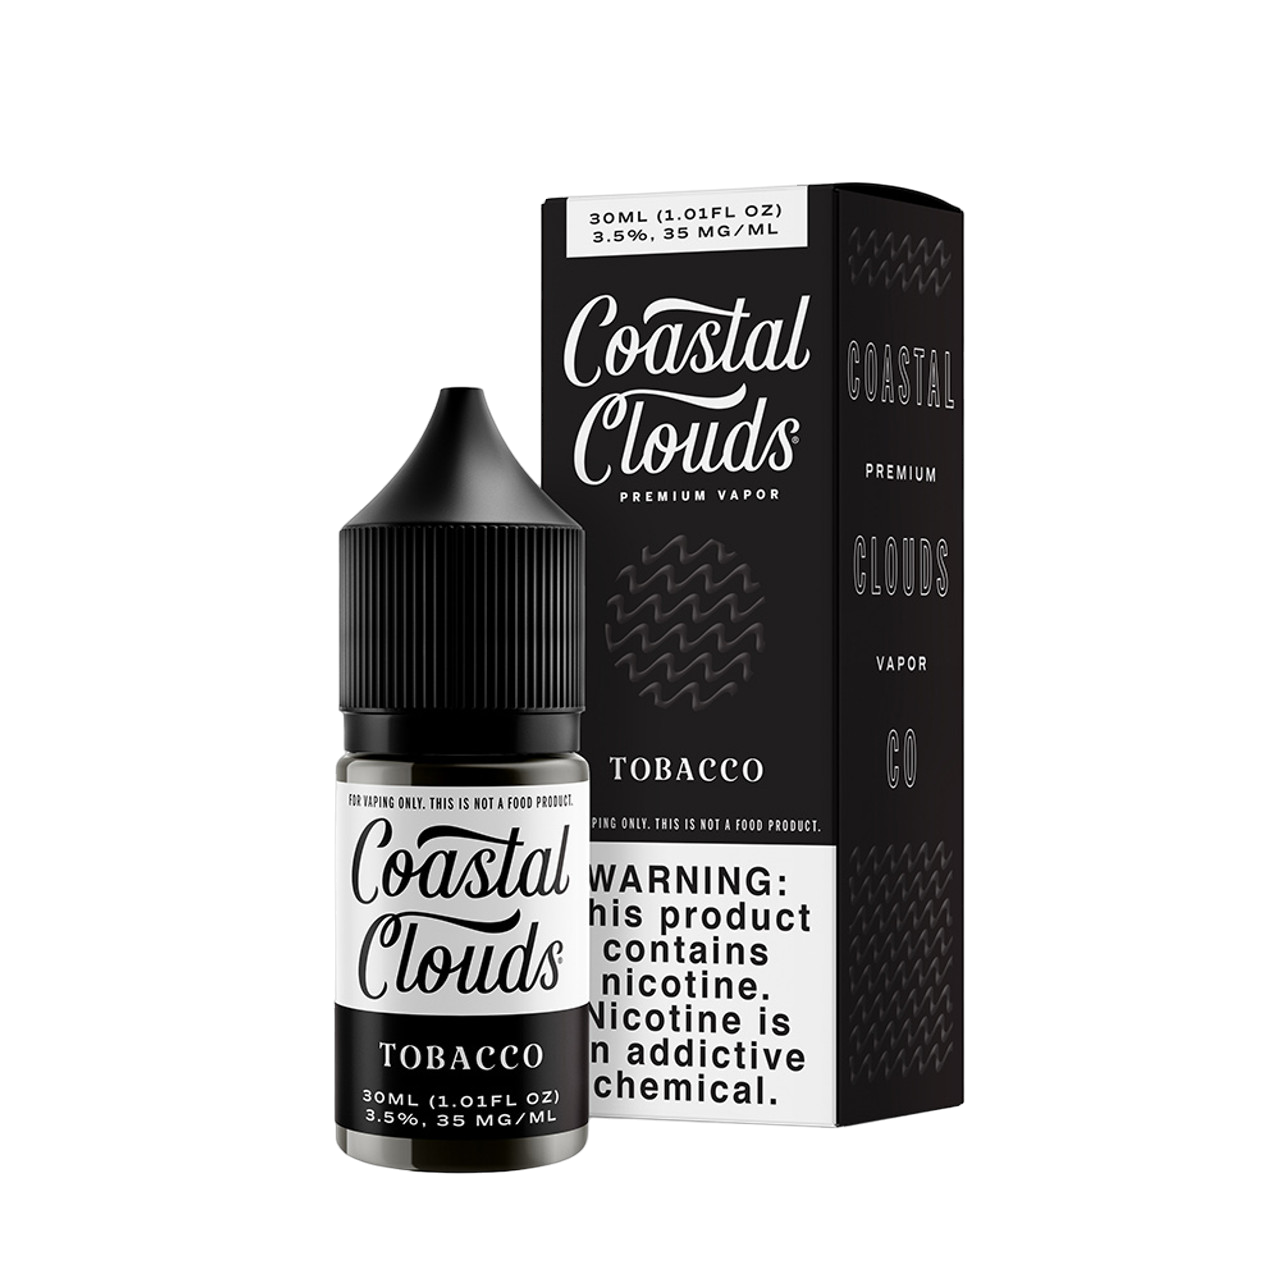 Coastal Clouds Premium Vapor Nicotine Salt E-Liquid 30ML Tobacco